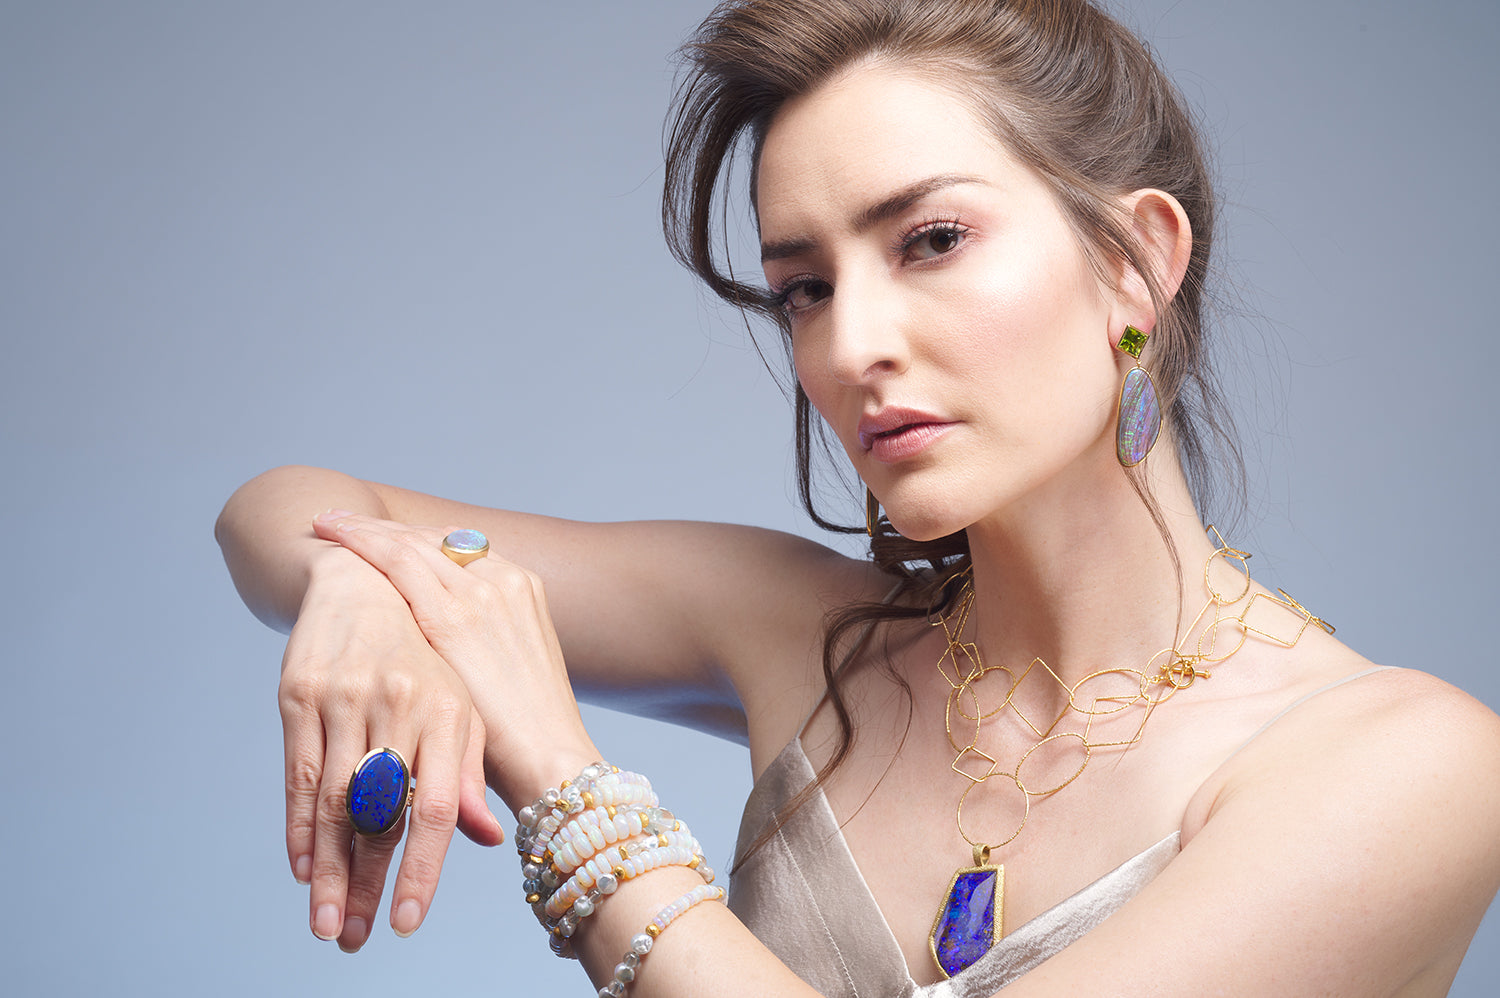 Crystal Opal, Keshi Pearl & Aquamarine Necklace